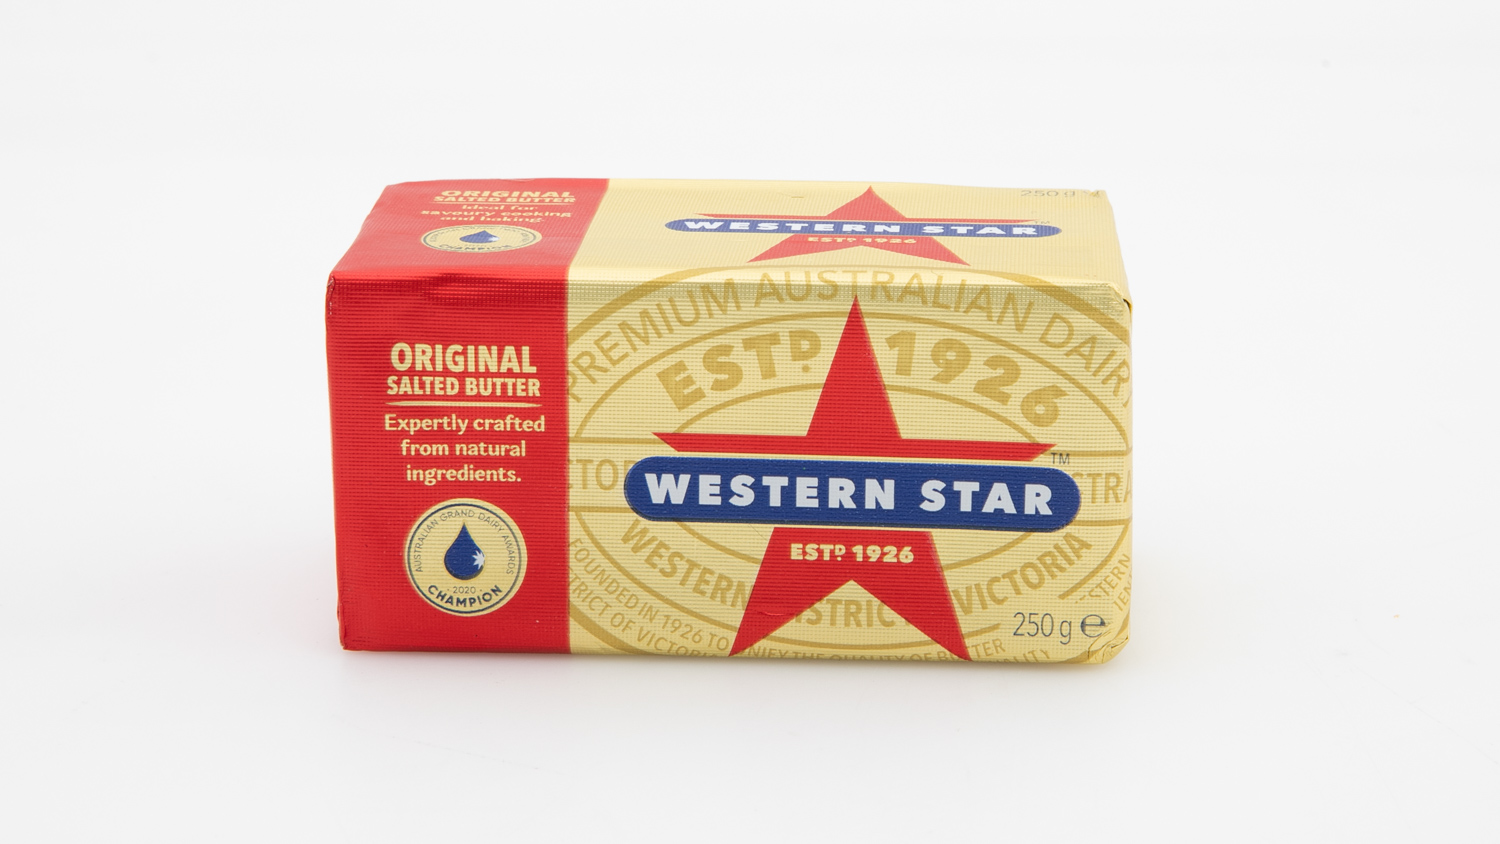 Western Star Original Salted Butter carousel image